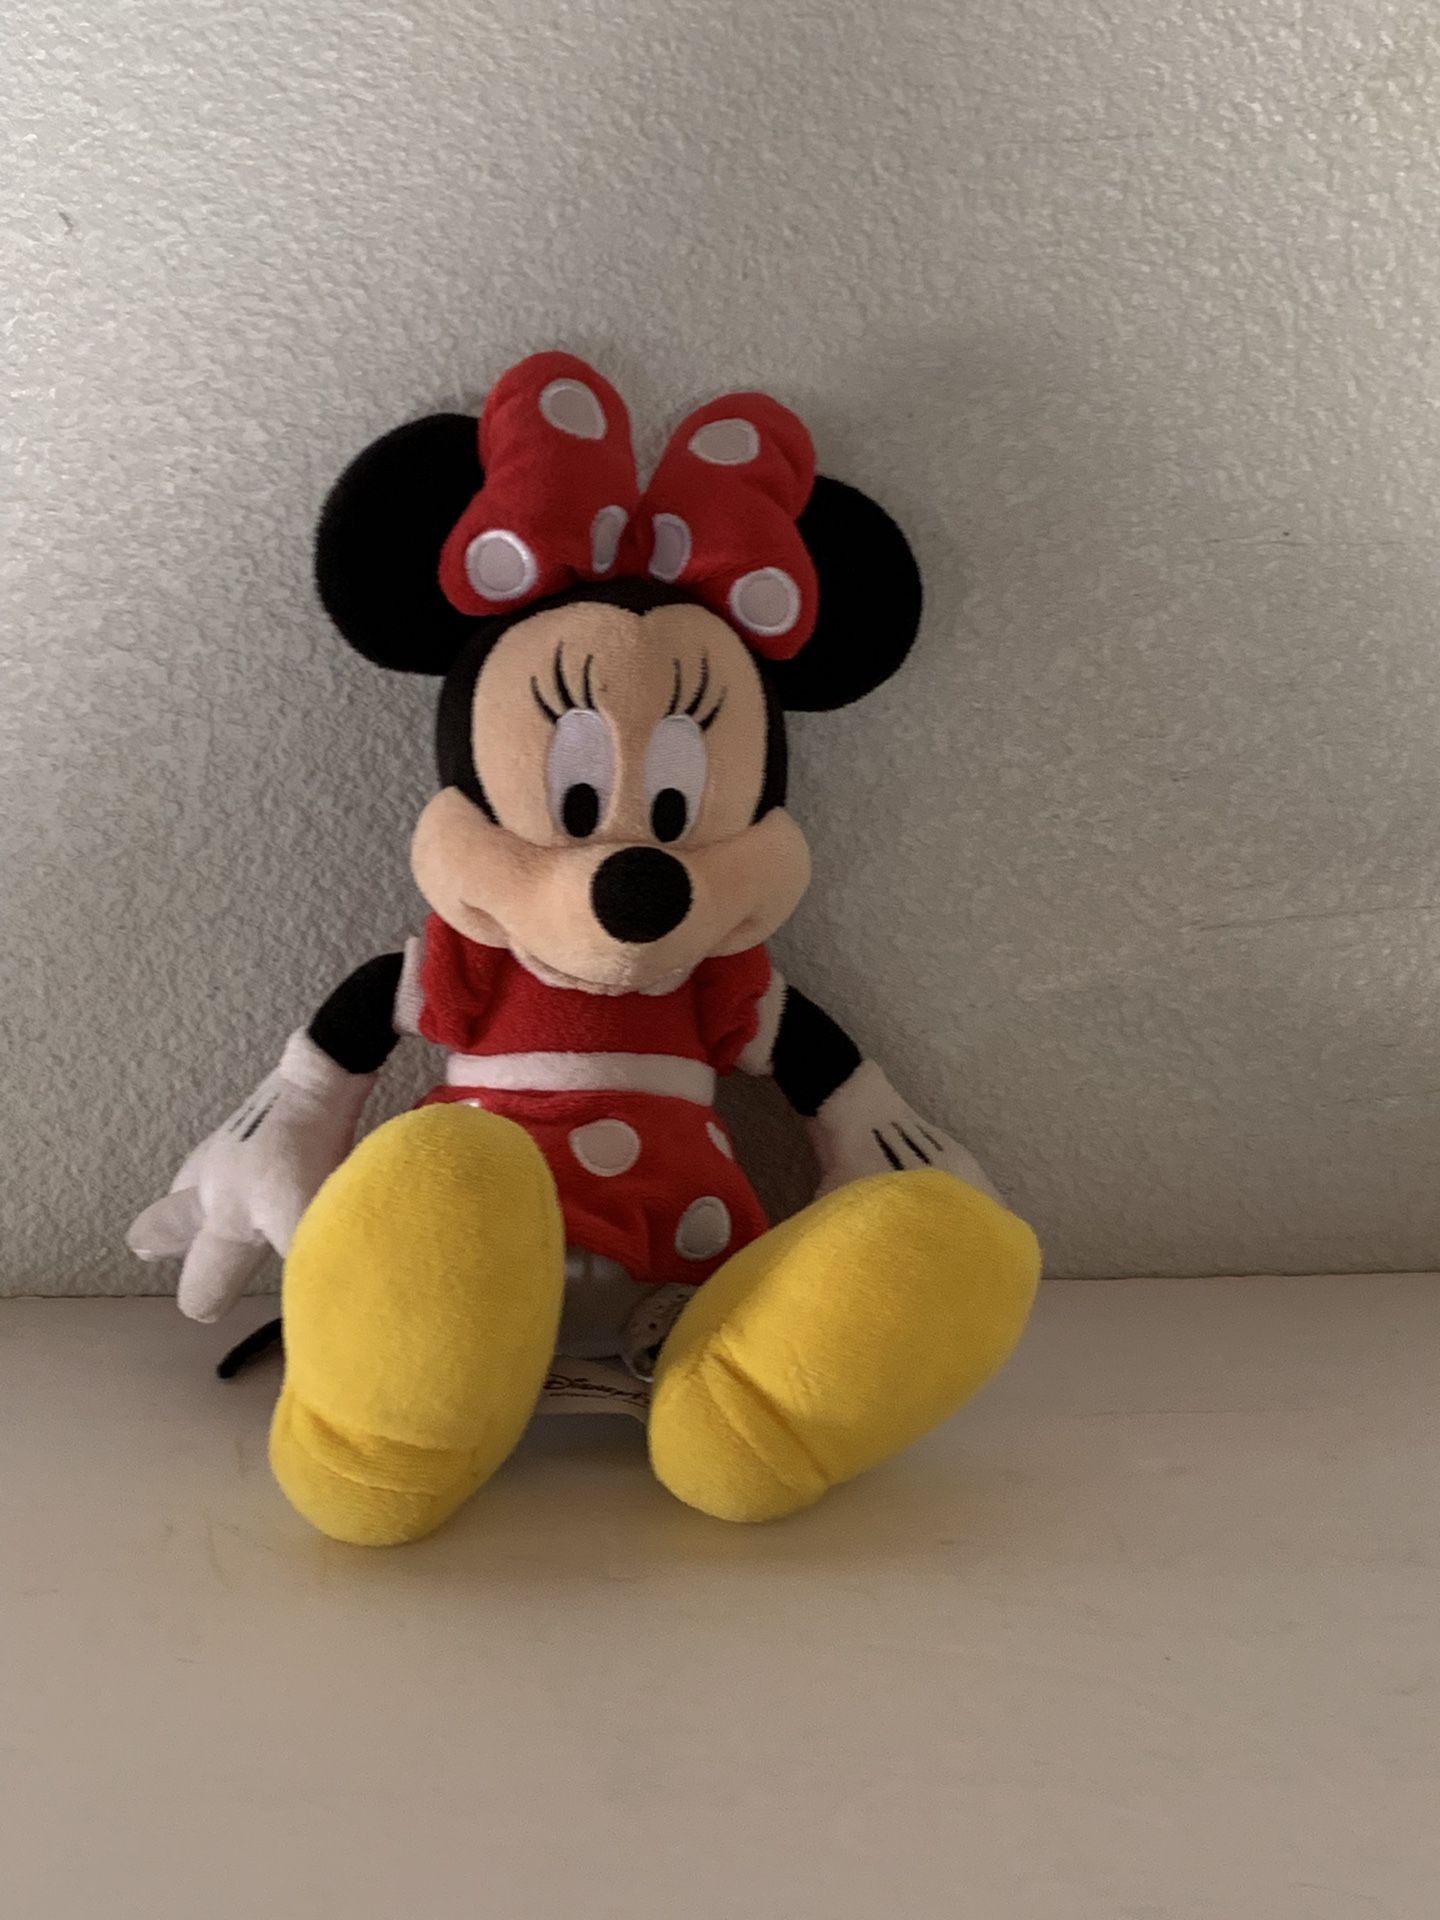 Disney Parks Authentic Original Minnie Mouse Plush 10” tall